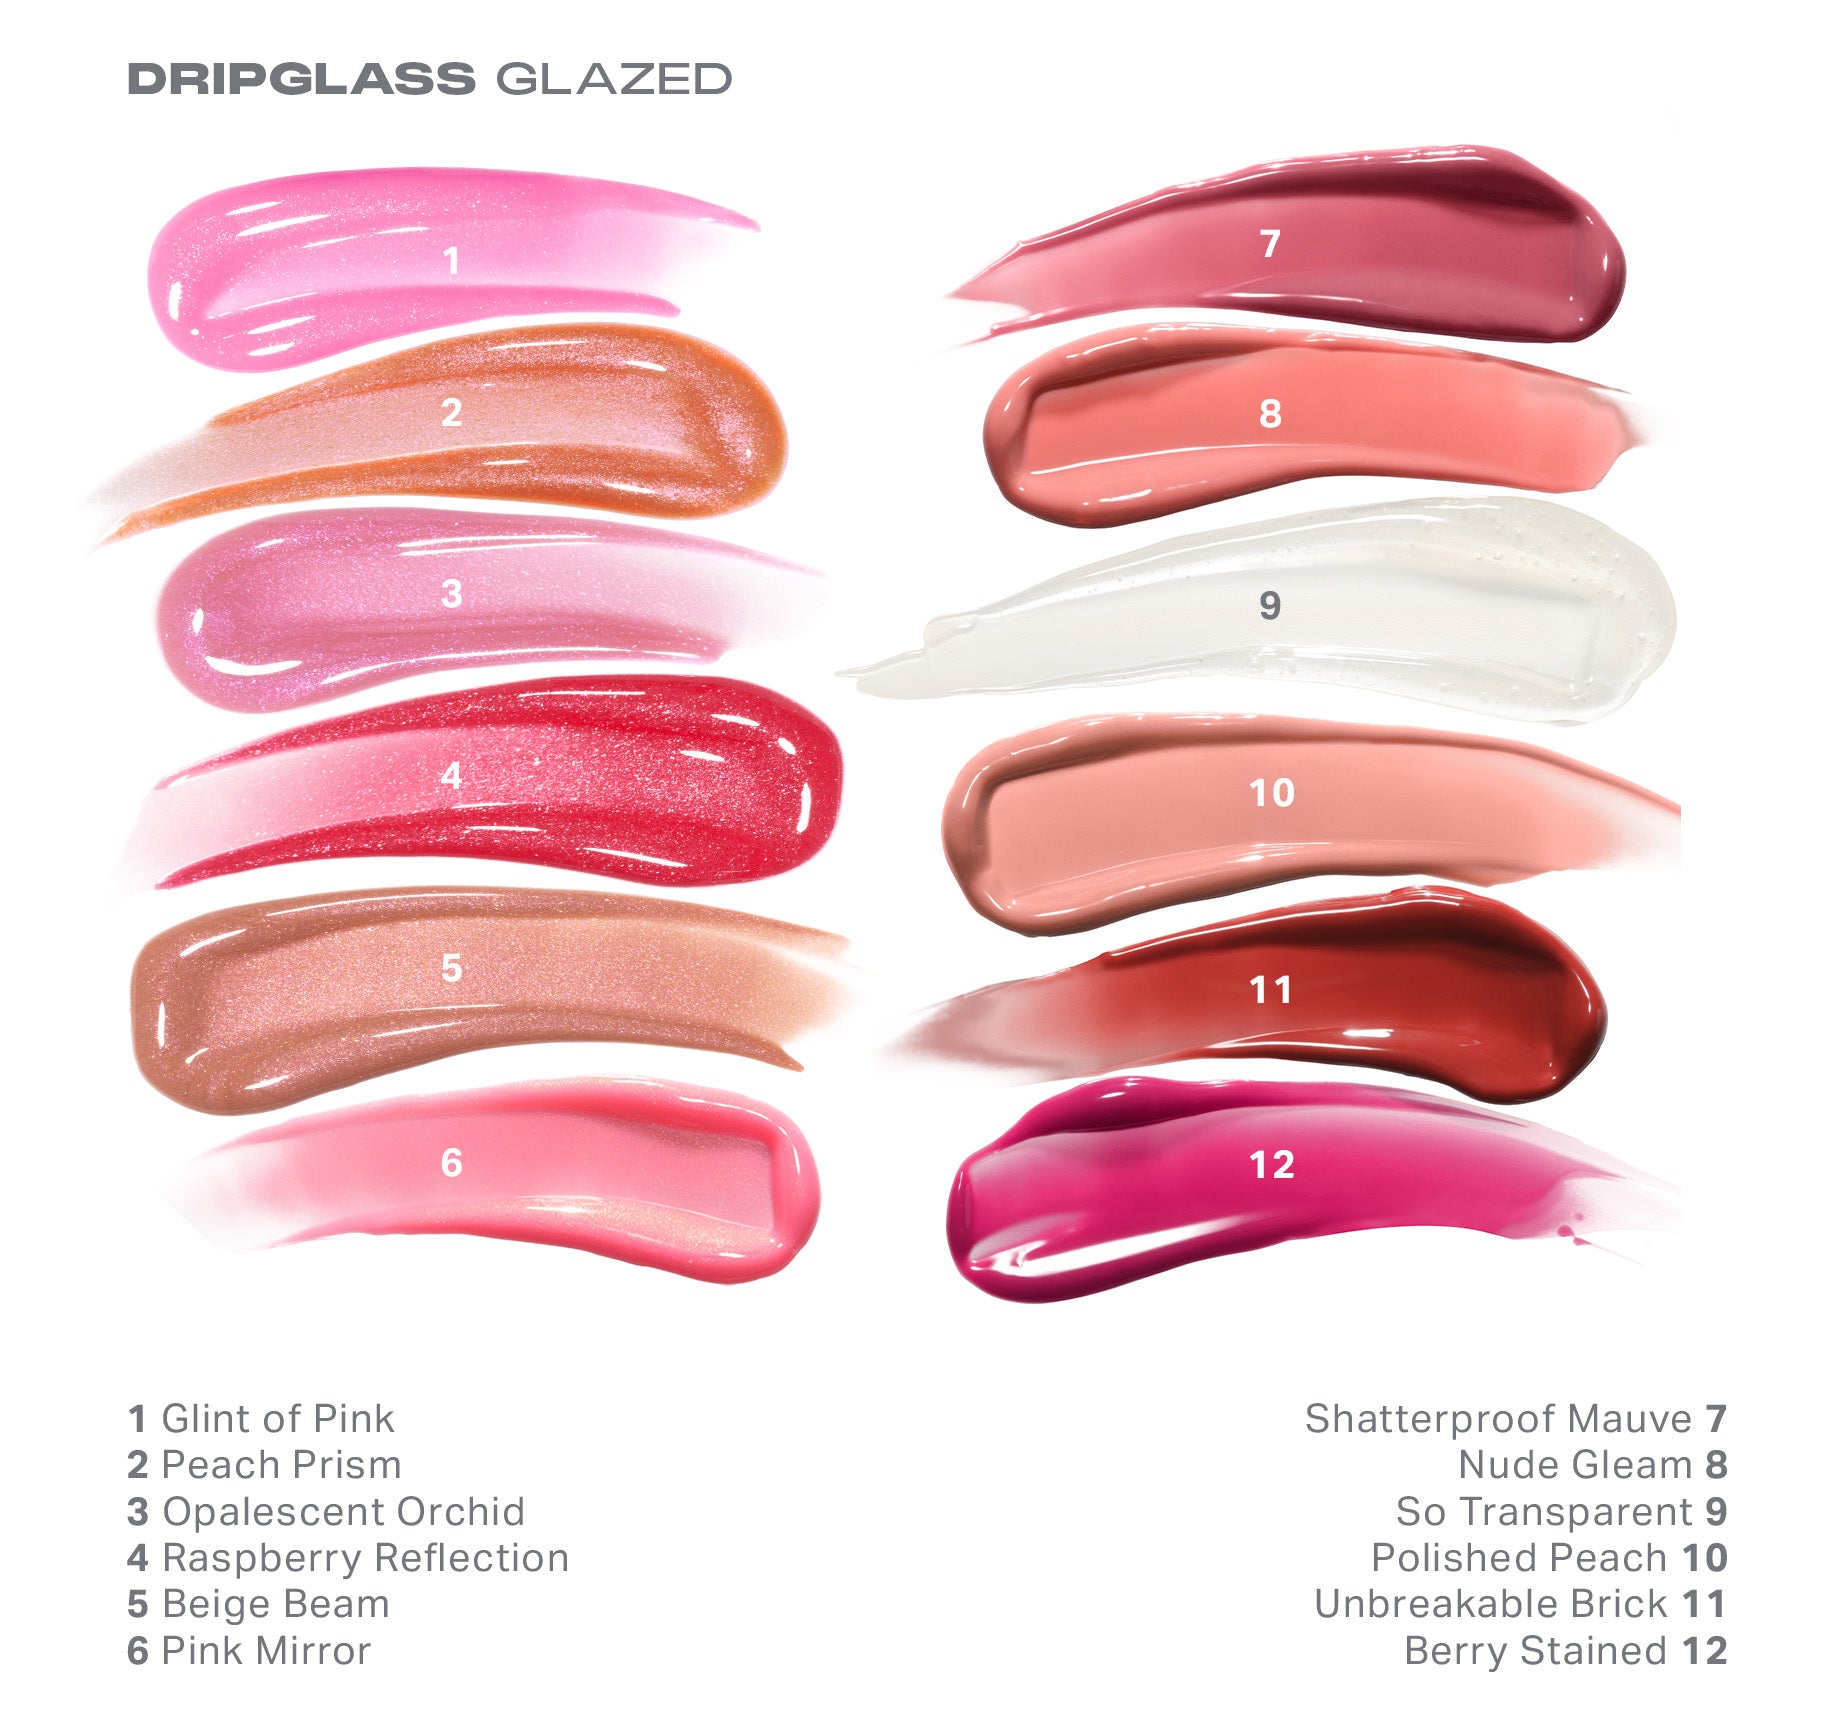 Dripglass Glazed High Shine Lip Gloss - So Transparent - Image 8